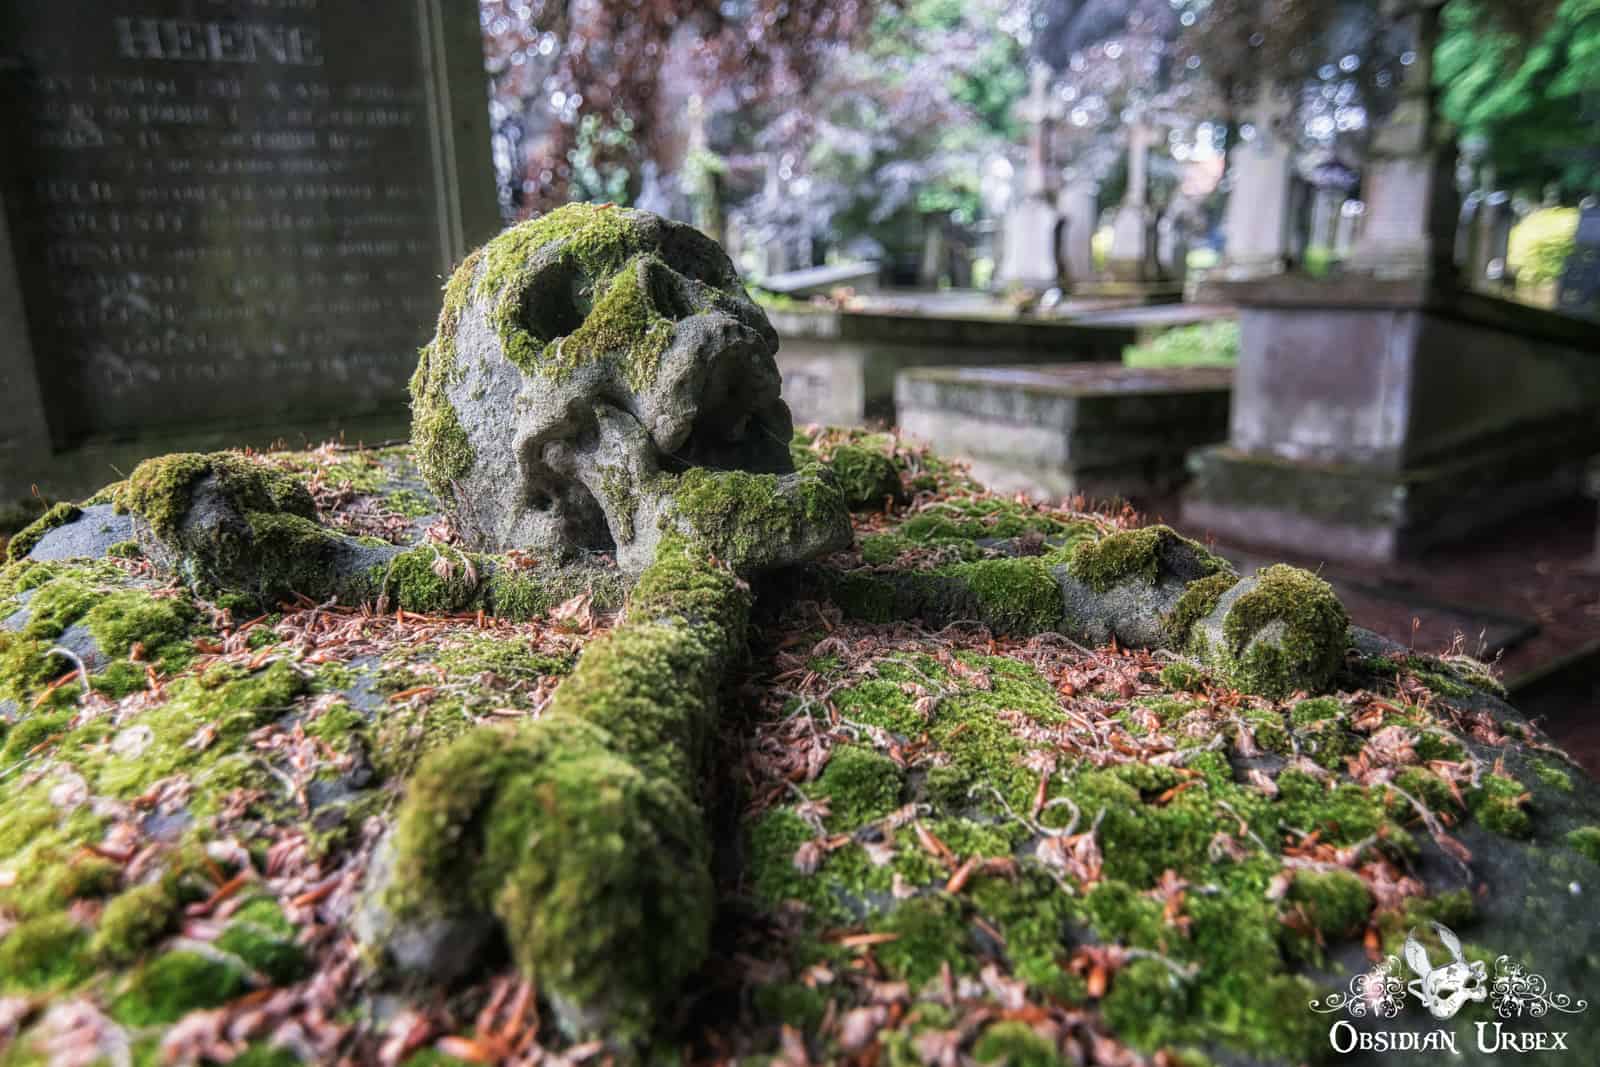 00_cemetery-of-the-skull-belgium-gravestone